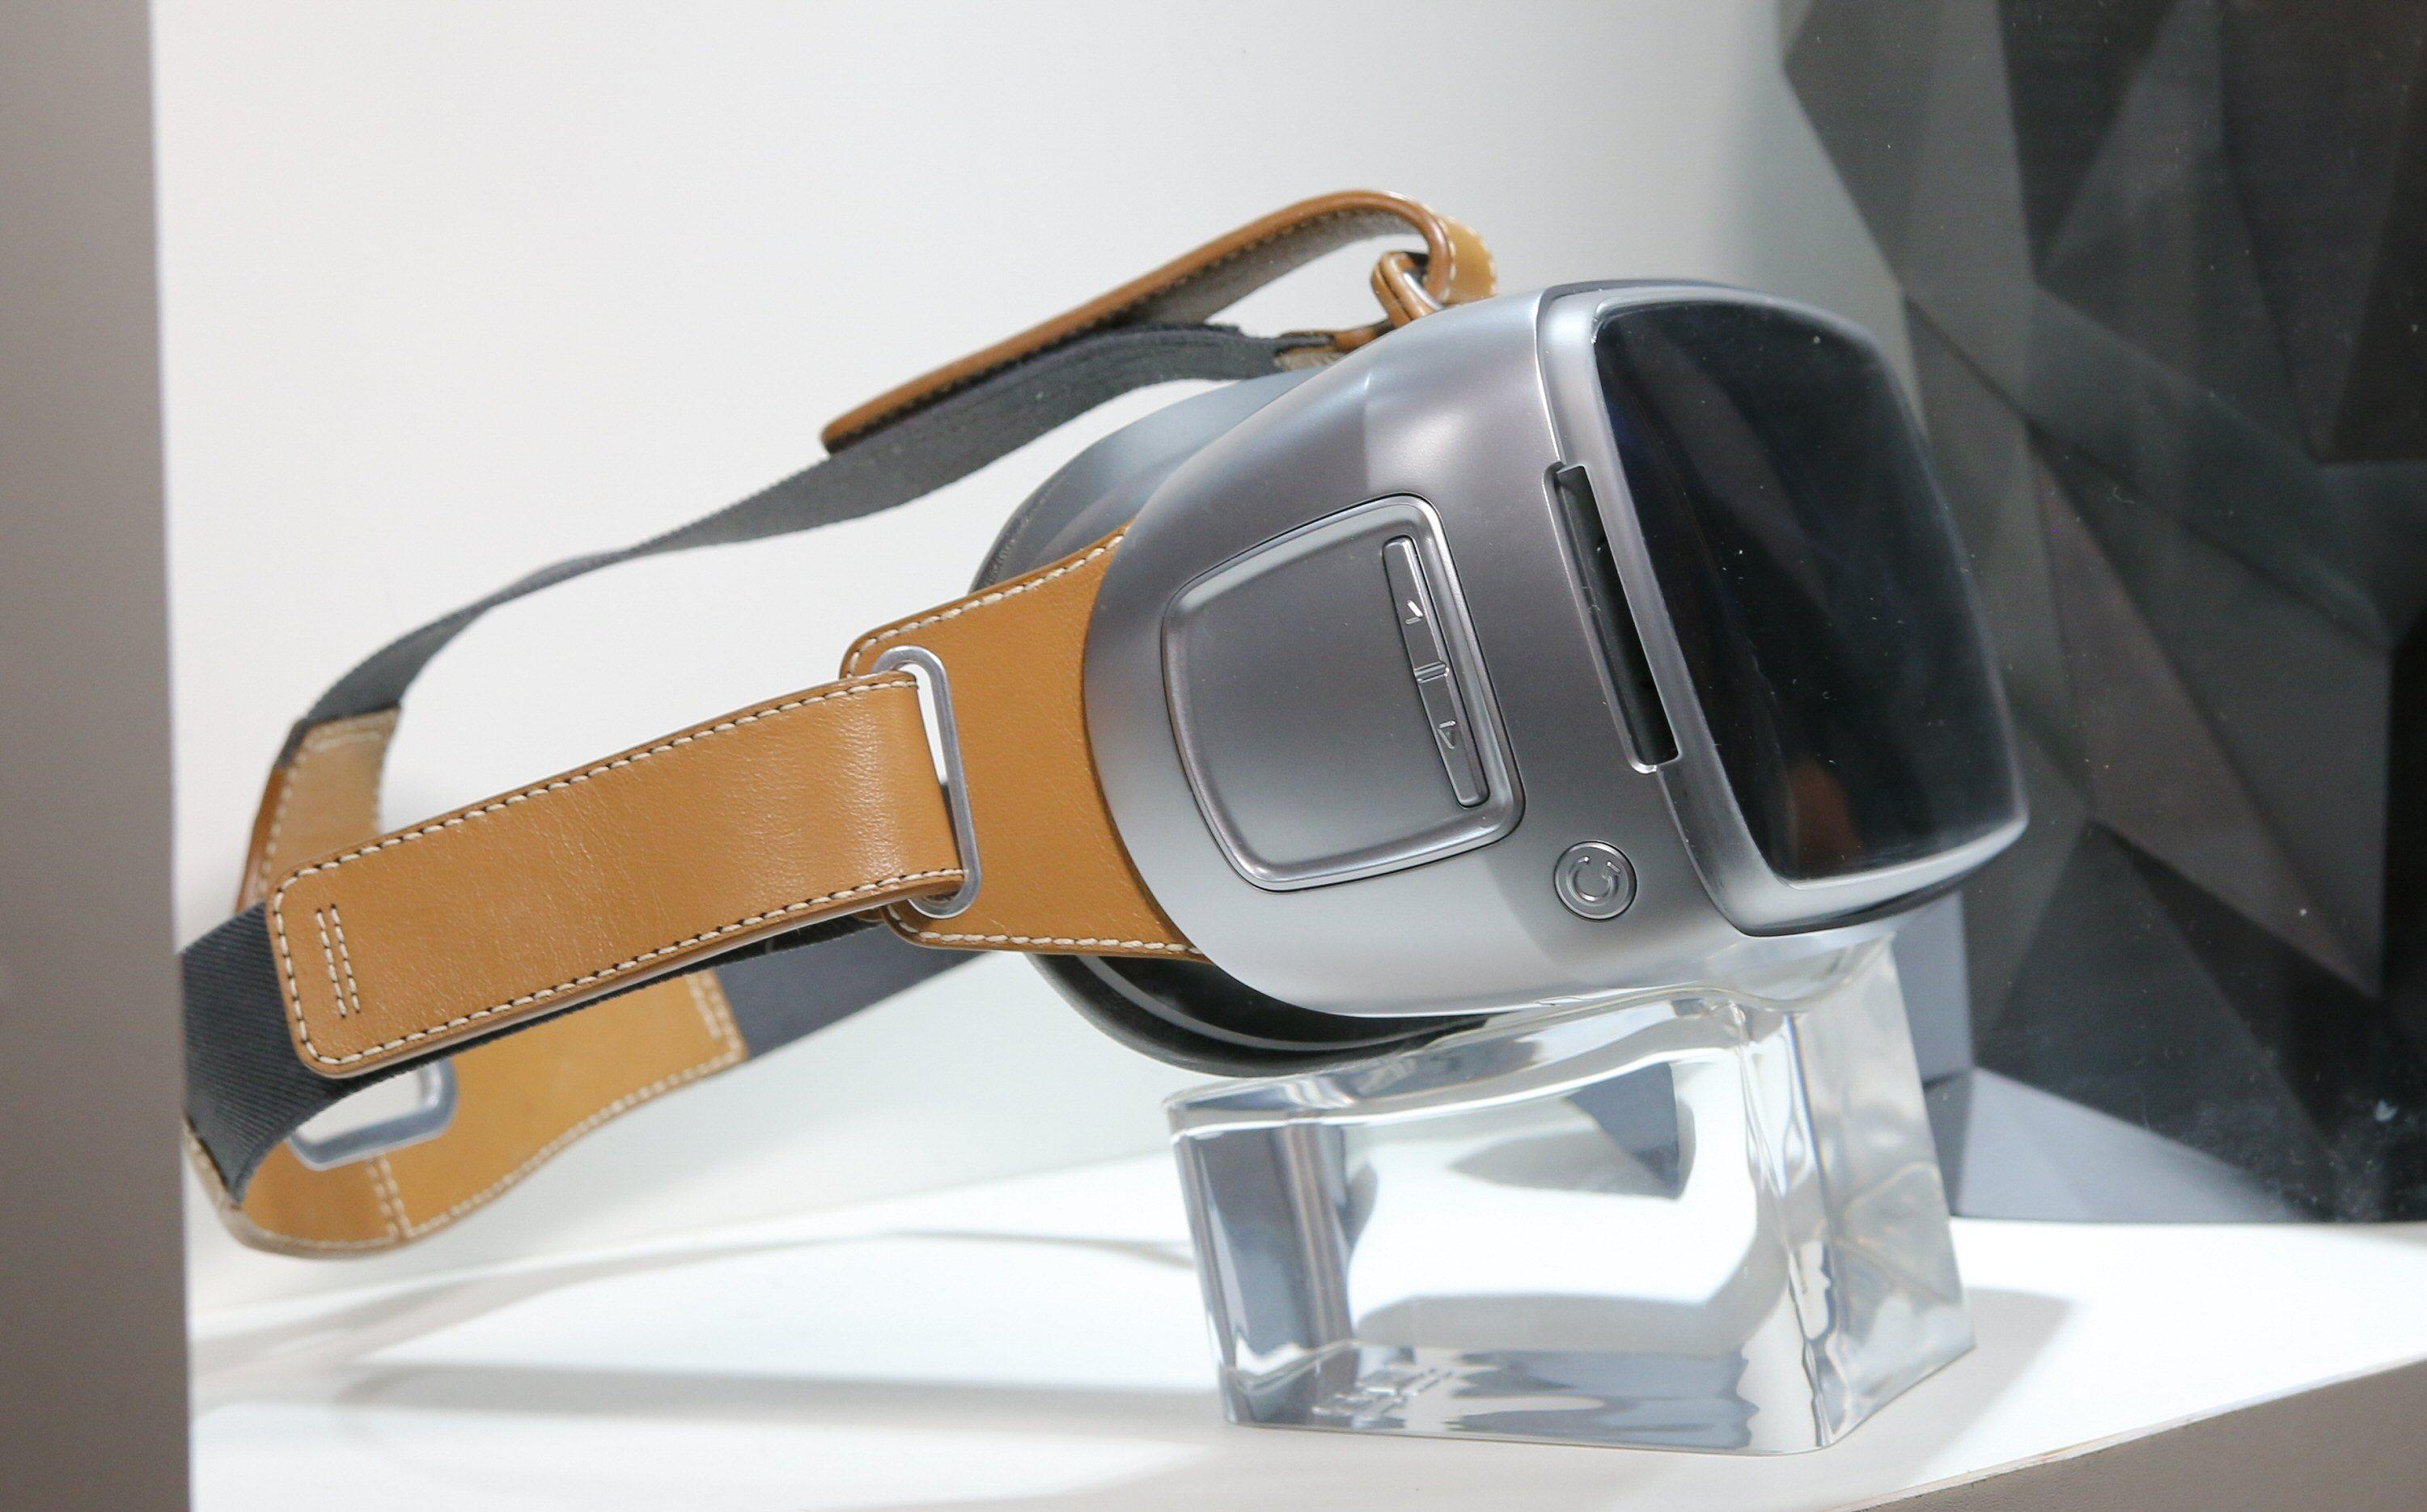 VR var naturligvis stort på årets Computex, og i en monter fant vi denne prototypen fra Asus. Trolig er det snakk om en slags styla VR-brille som slekter på Samsung Gear VR.